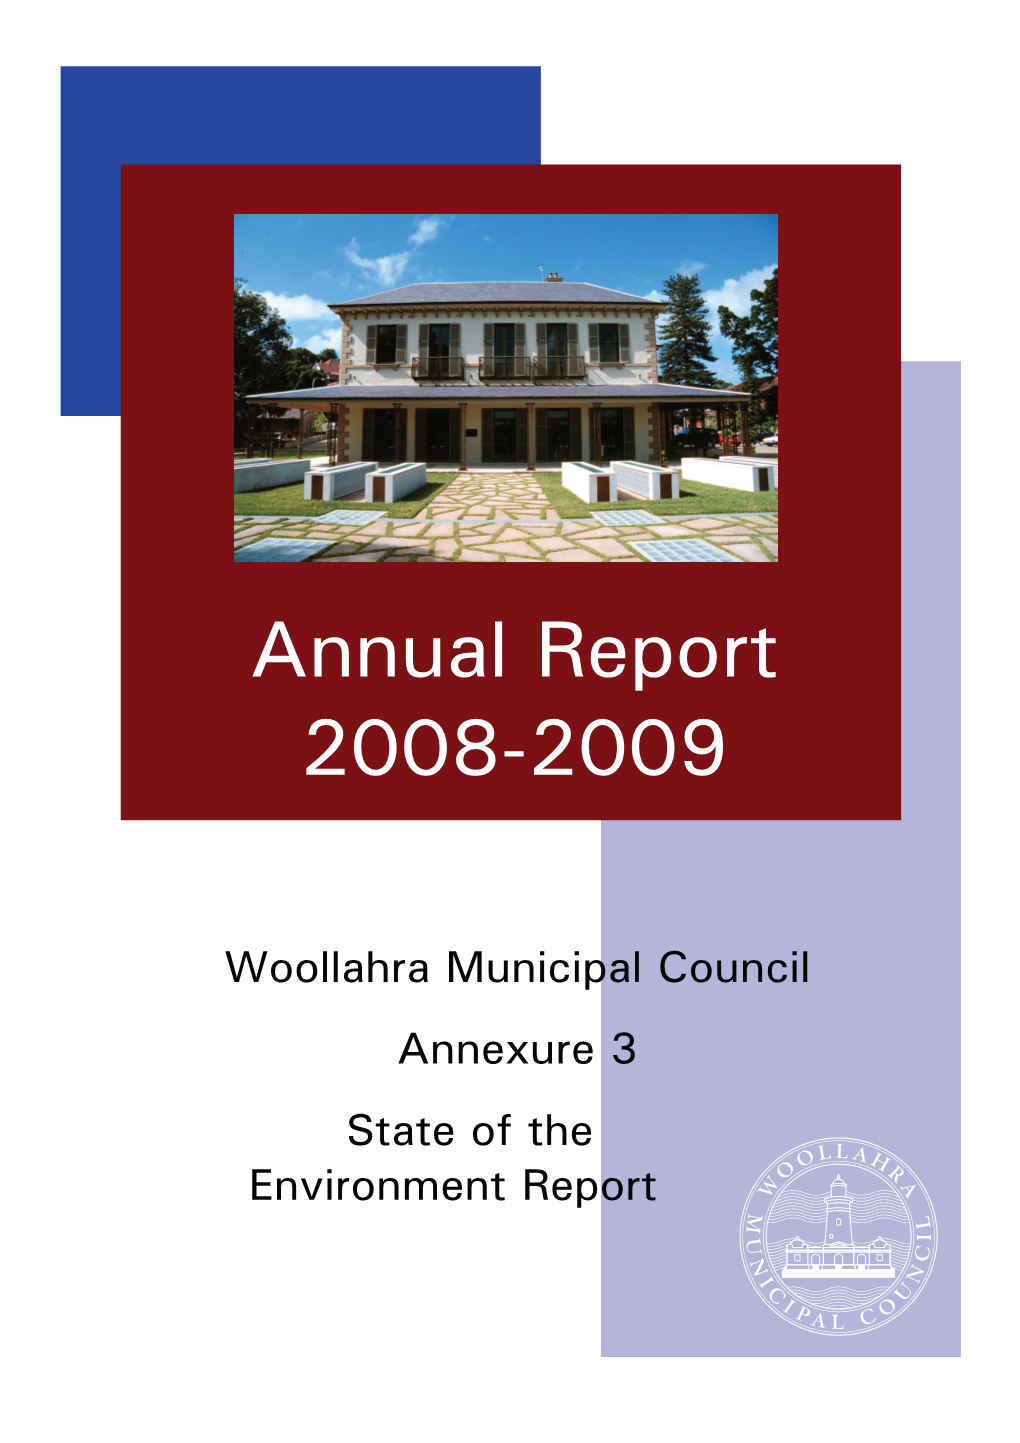 Annual Report 2008-2009 Annexure 3